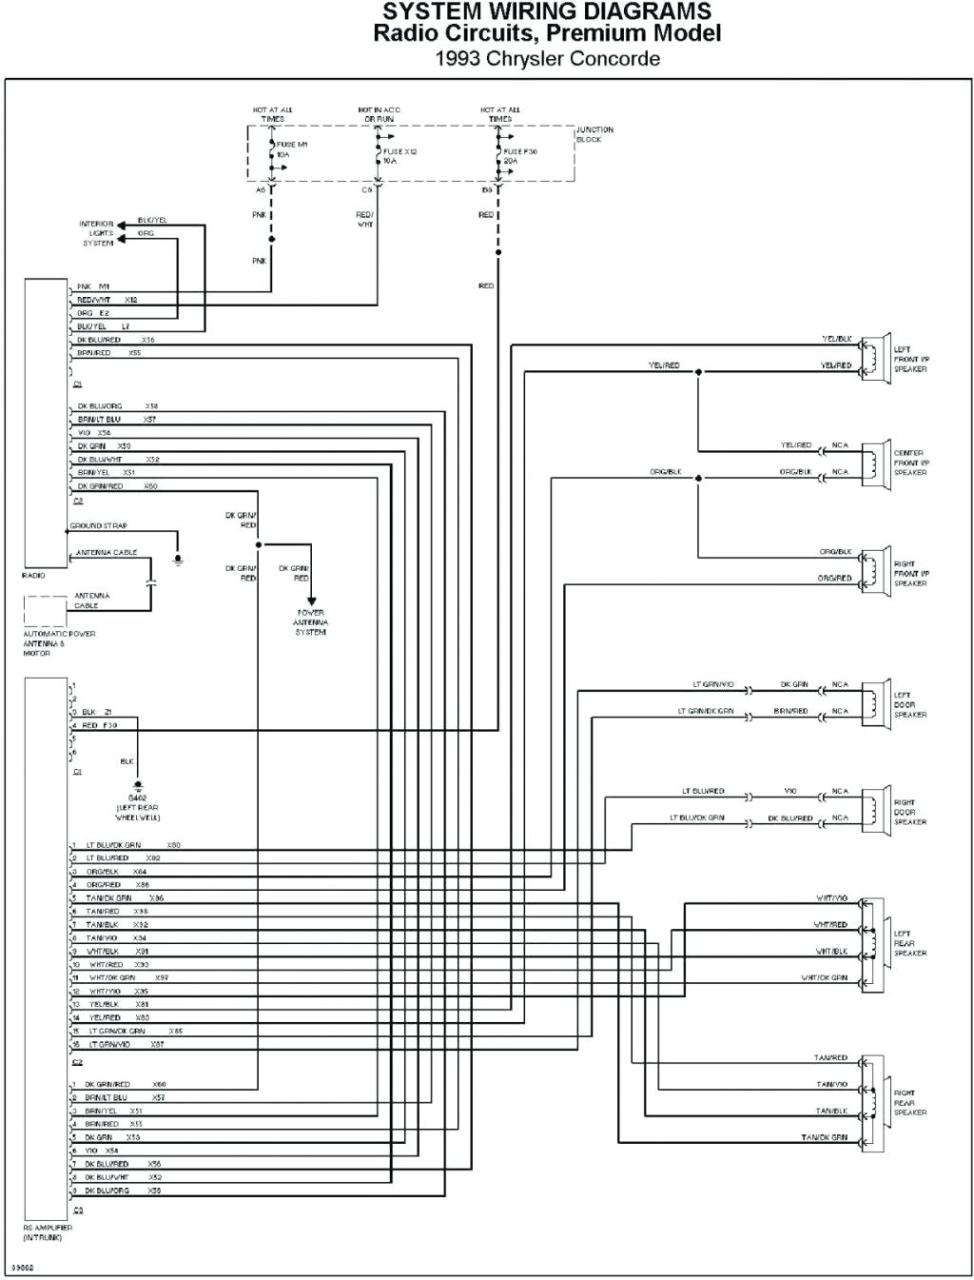 2005 Honda Element Stereo Wiring Diagram Free Wiring Diagram